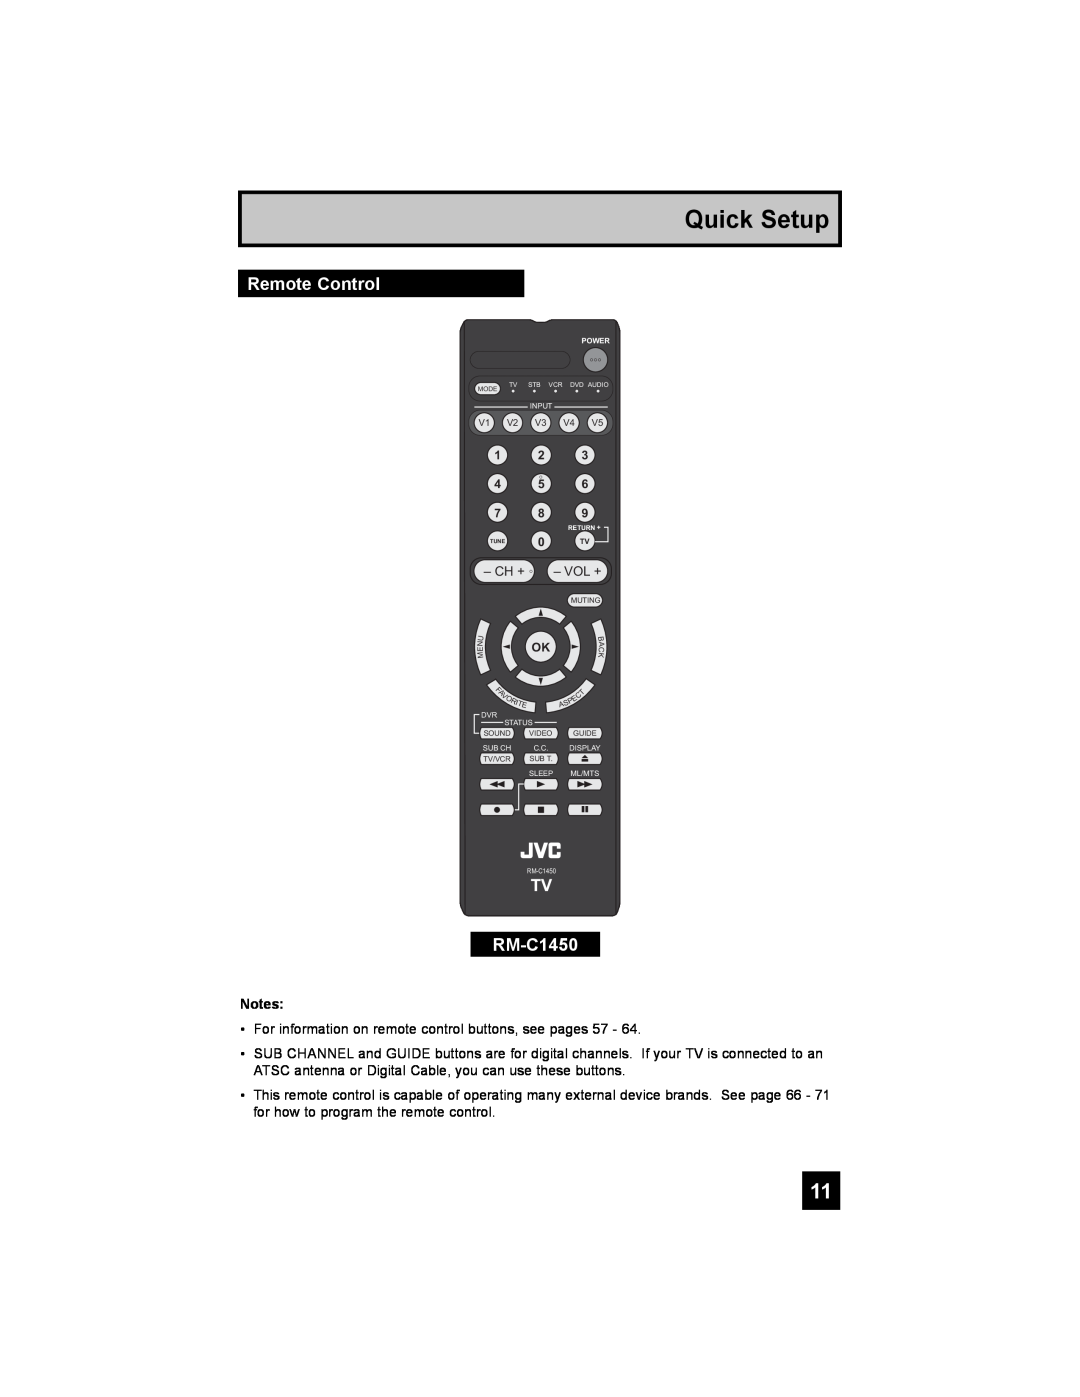 JVC LT-37X688, LT-42X688 manual Remote Control, TV RM-C1450, Quick Setup 